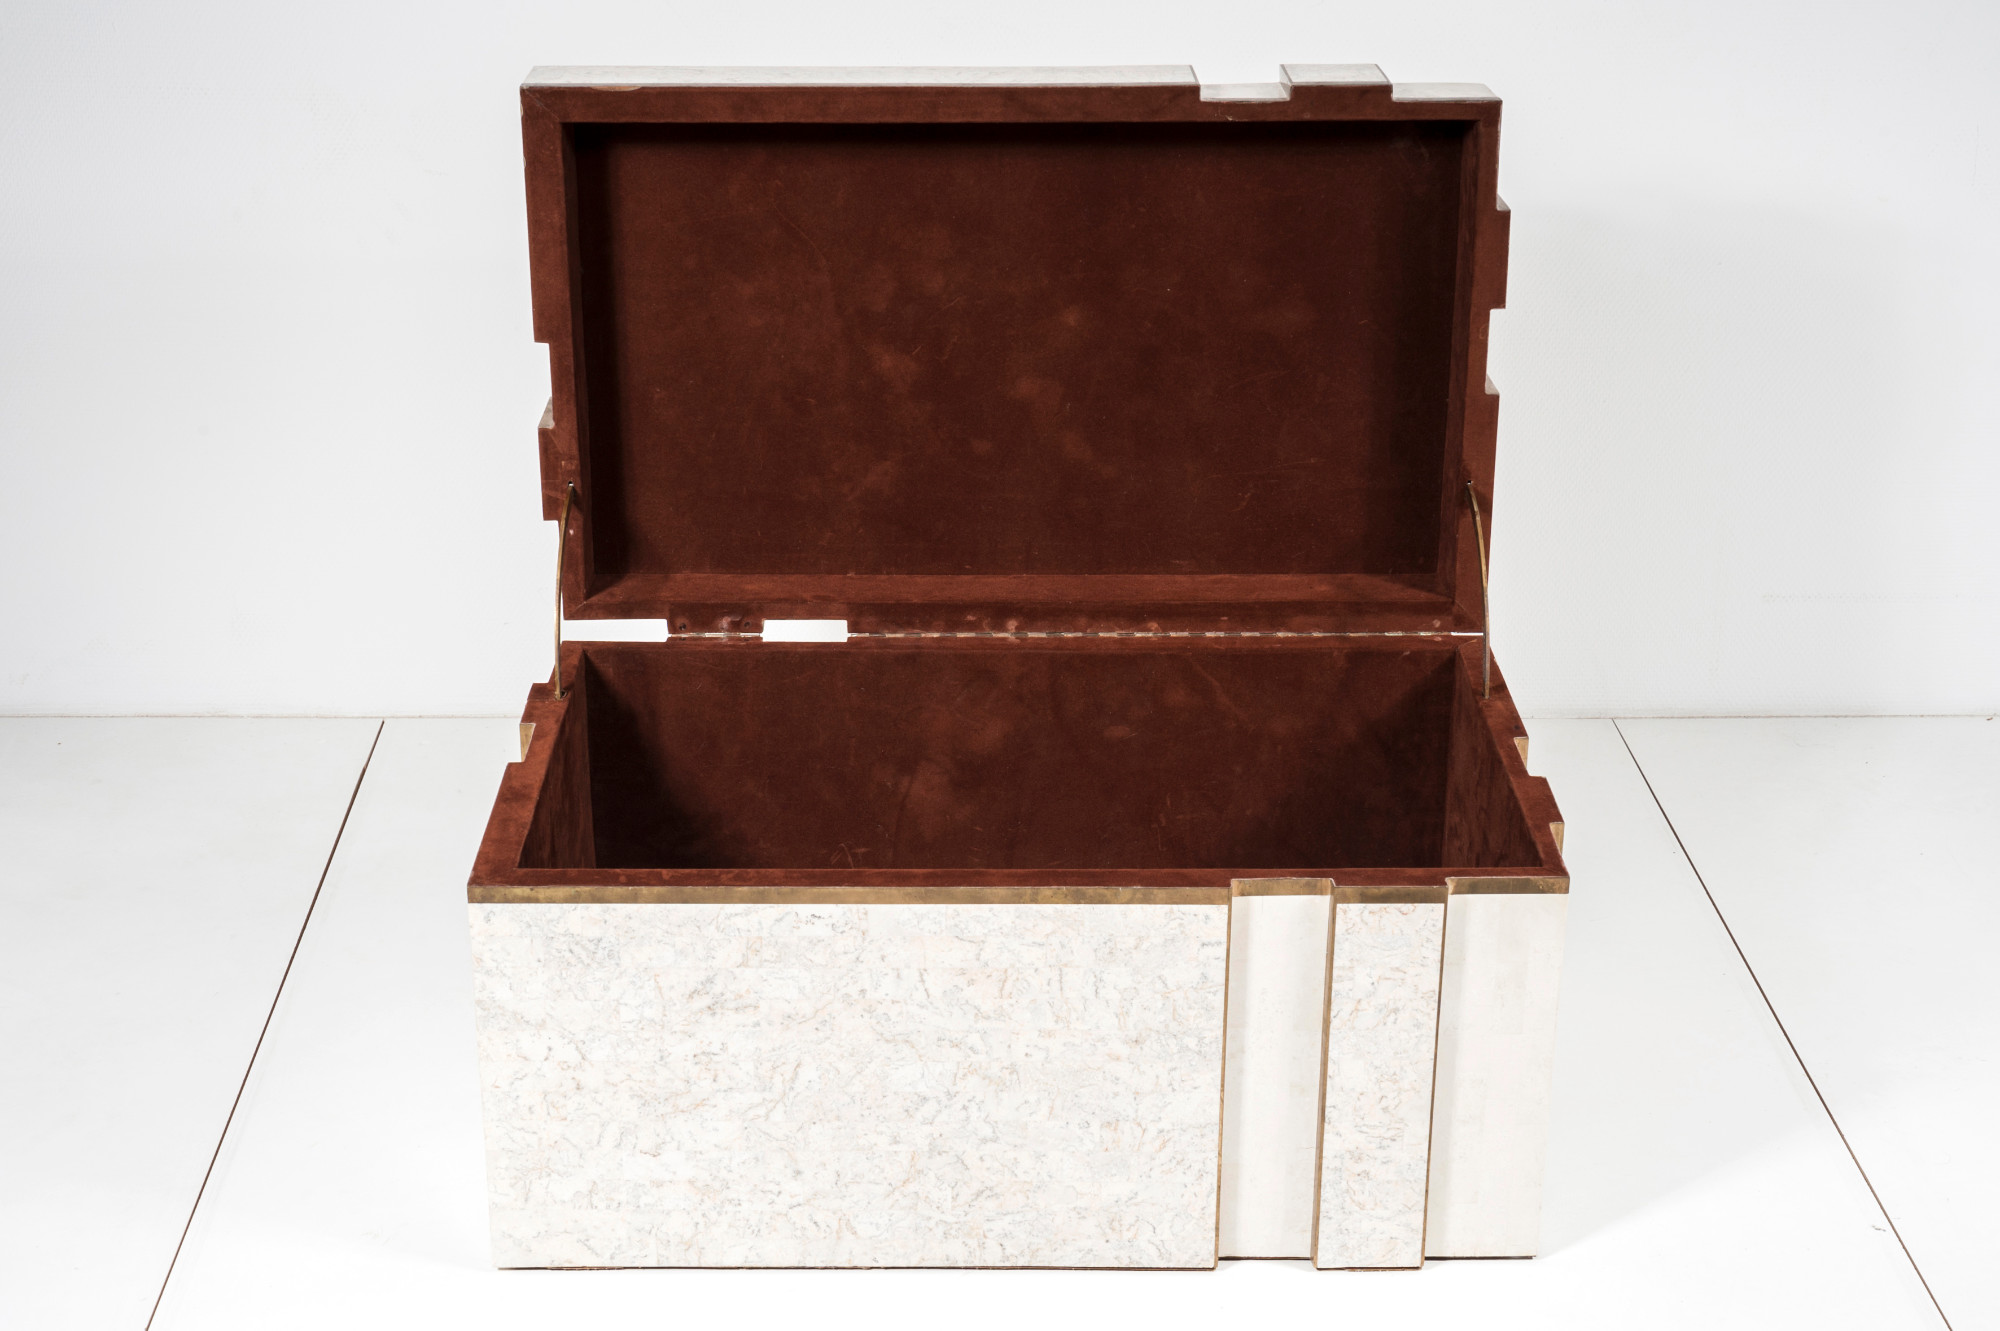 White stone box / bar / trunk By Maitland Smith circa 1970